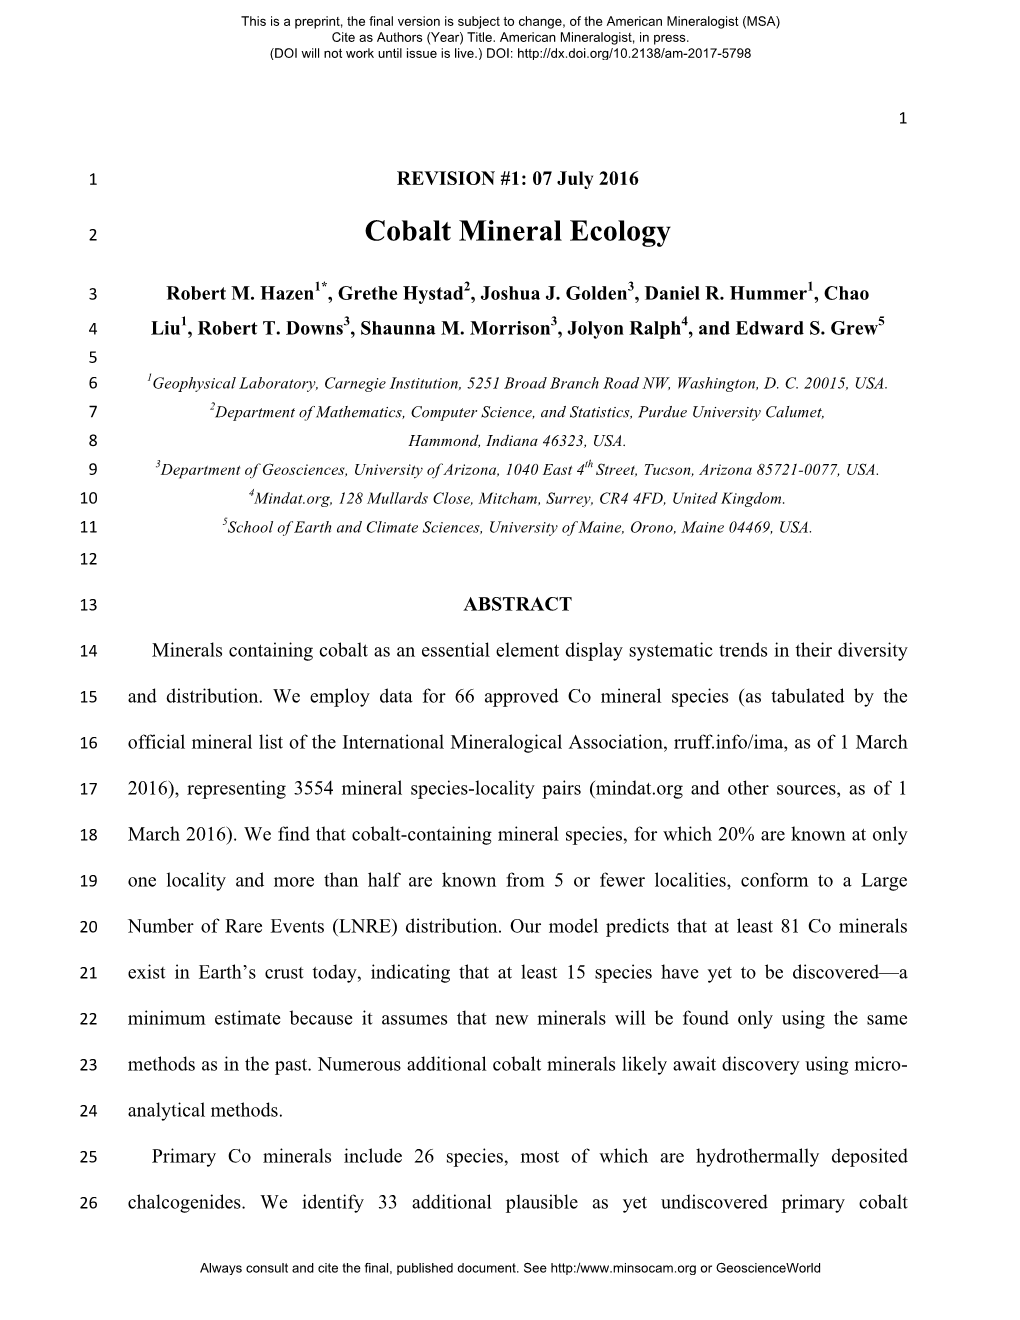 Cobalt Mineral Ecology